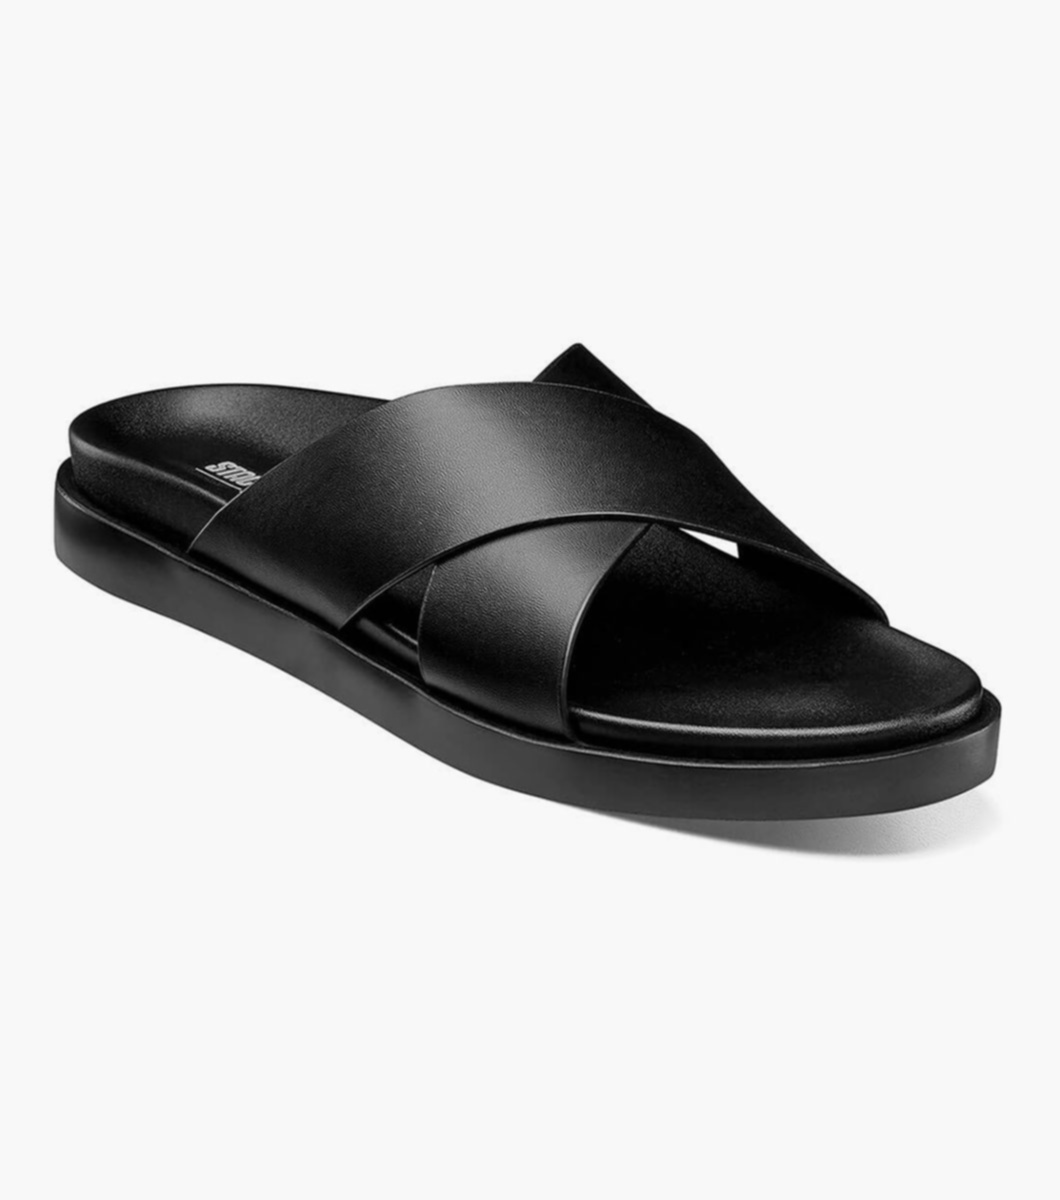 men’s dress slide sandals